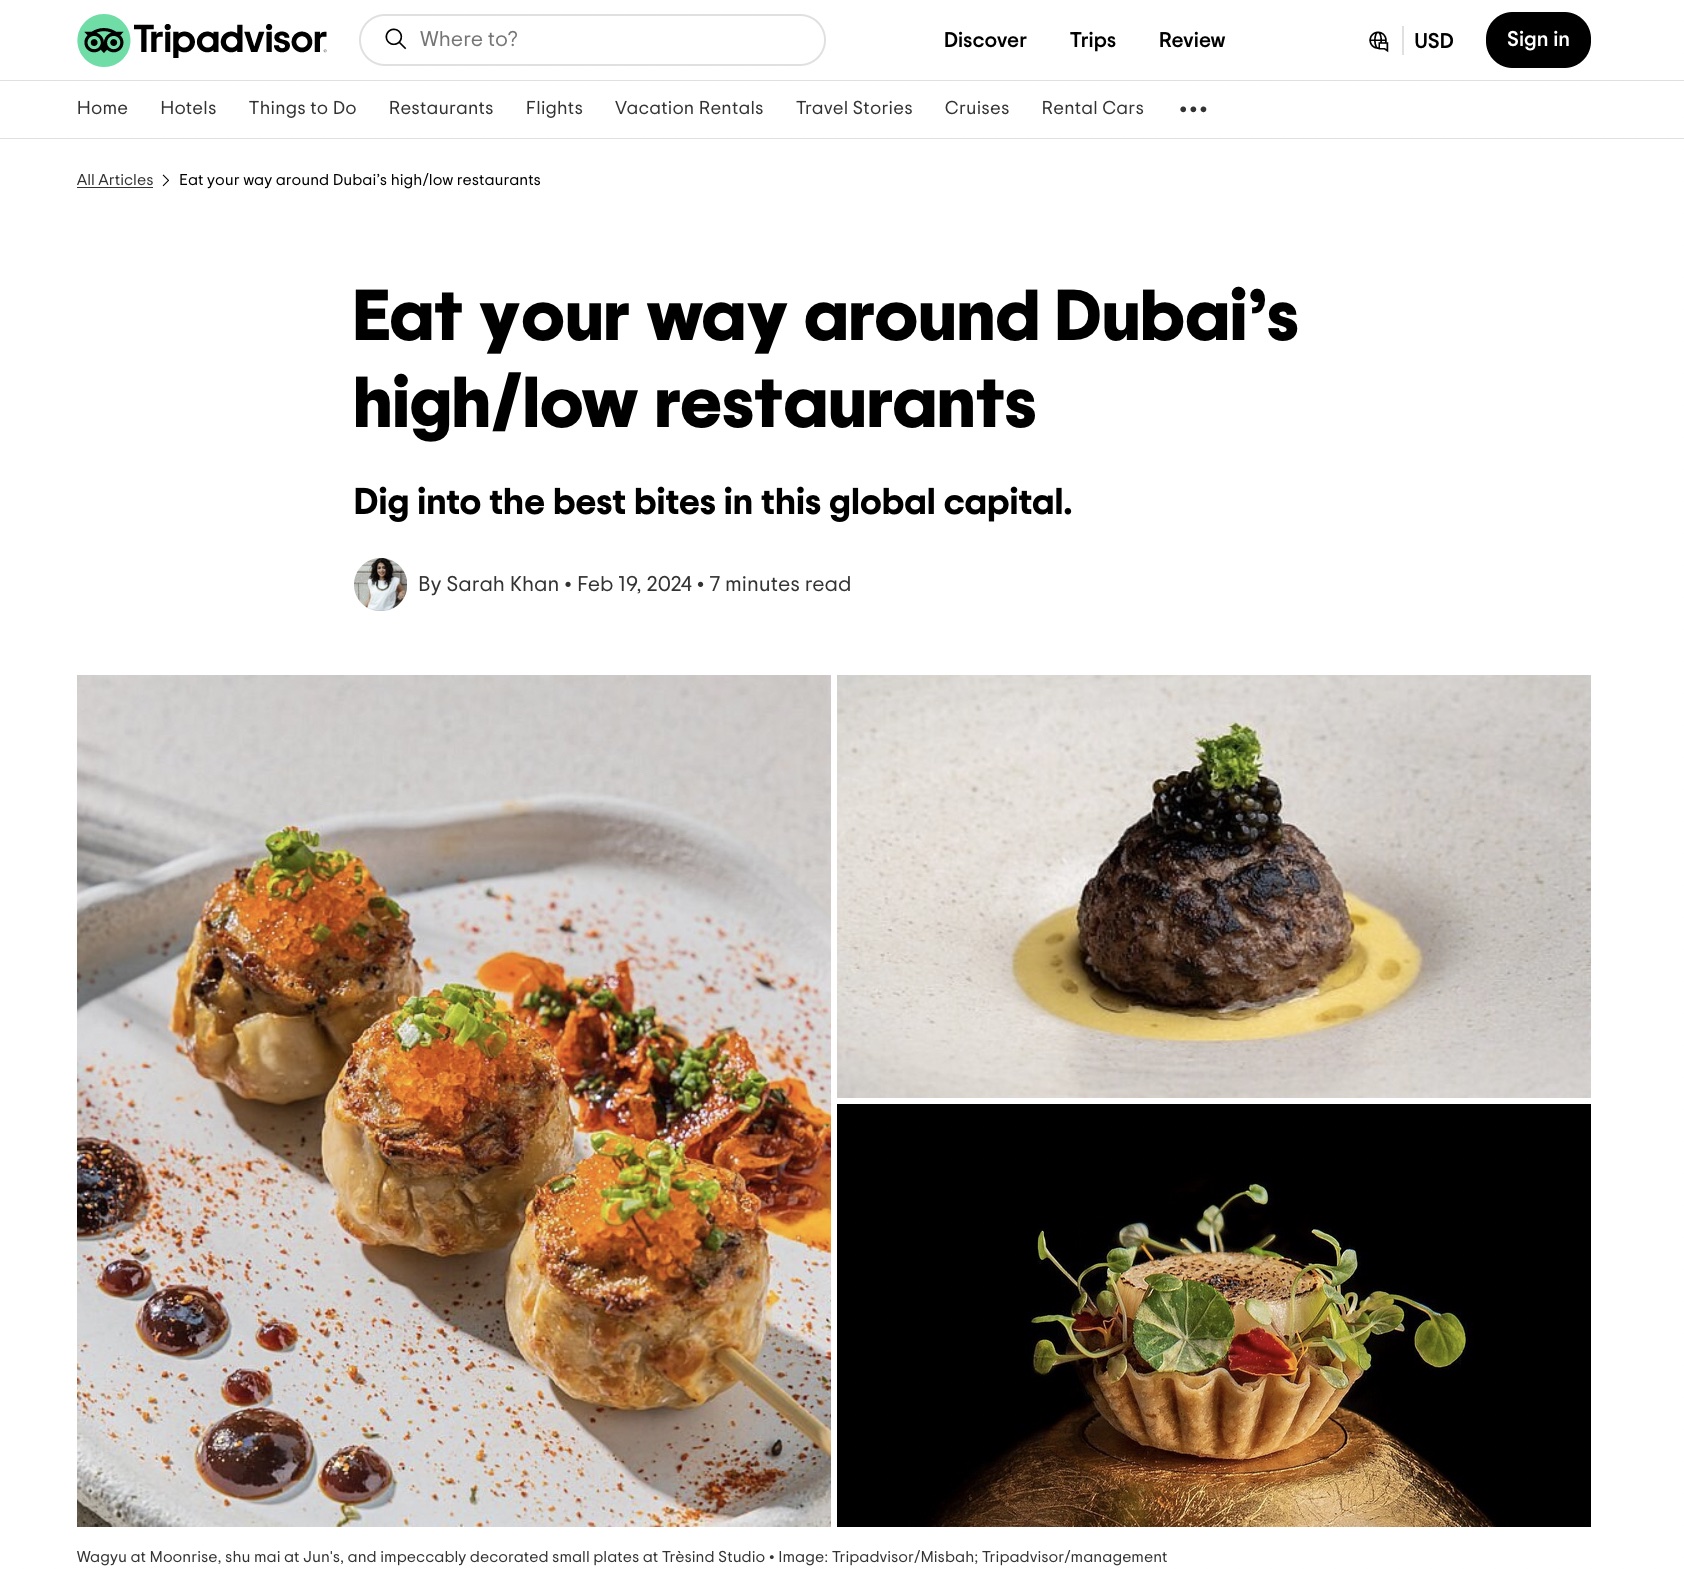 Tripadvisor: Eat your way around Dubai’s high/low restaurants